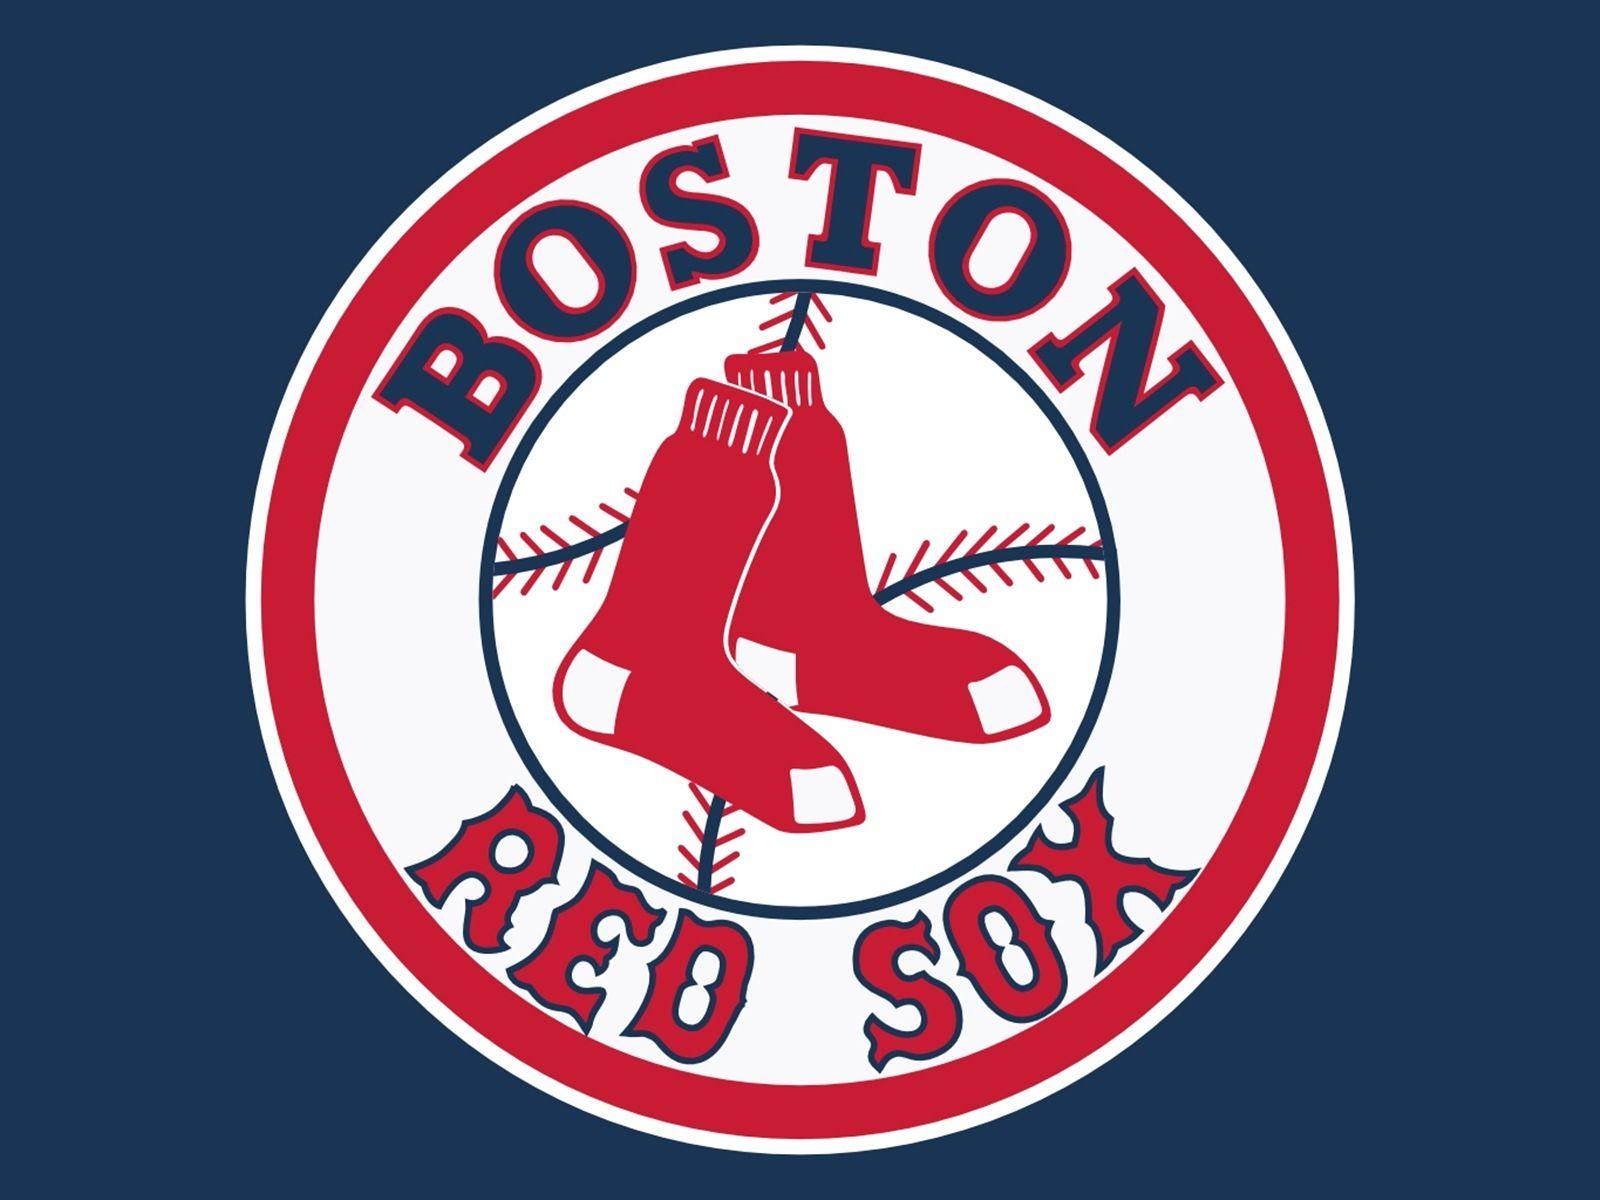 Red Socks Logo - Free Boston Red Sox Logo Download, Download Free Clip Art, Free Clip